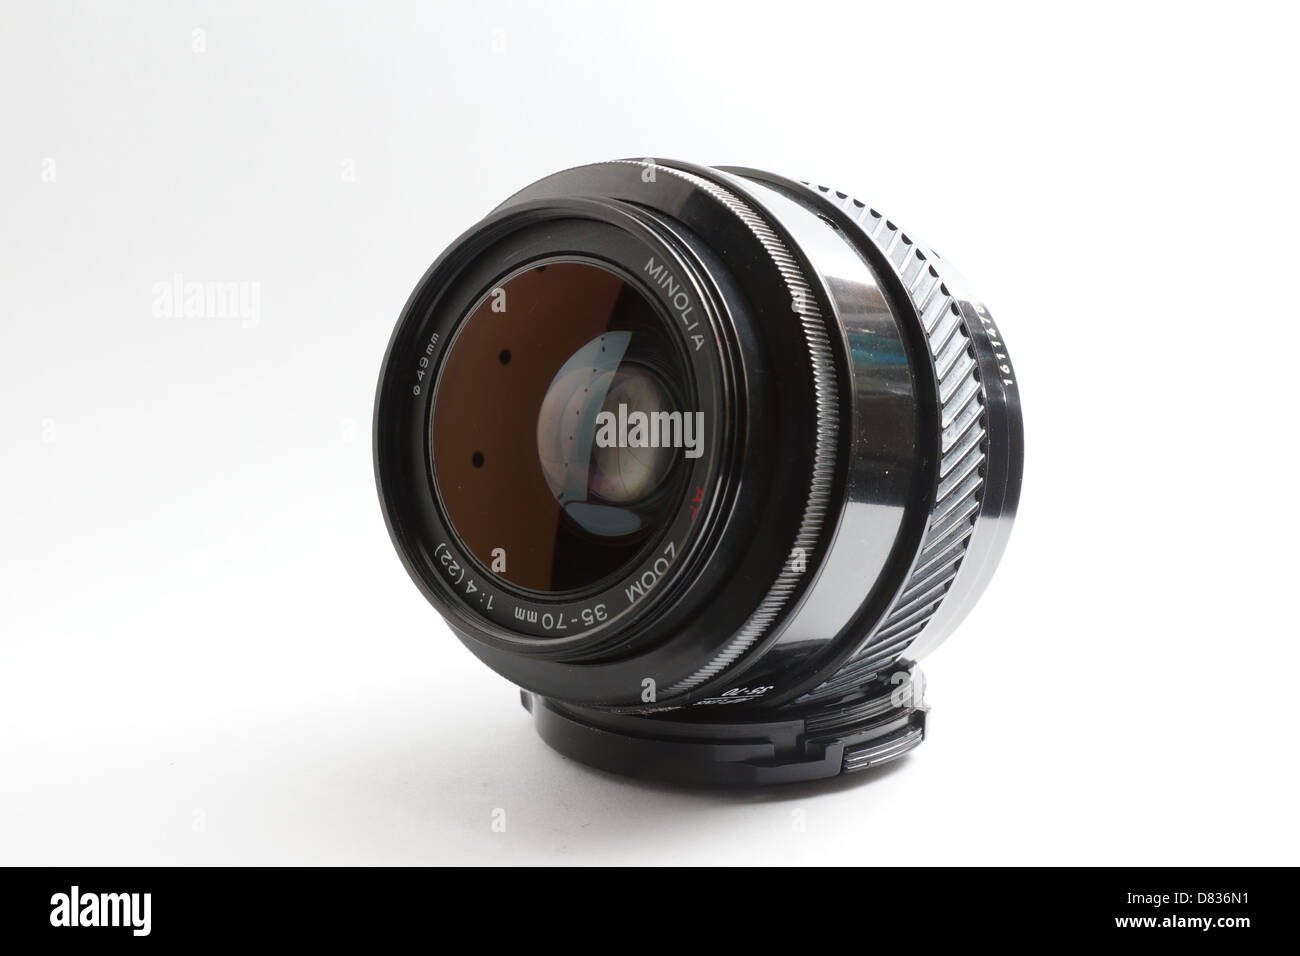 Camera lens for Minolta Maxxum, 35-70mm f4 zoom Stock Photo